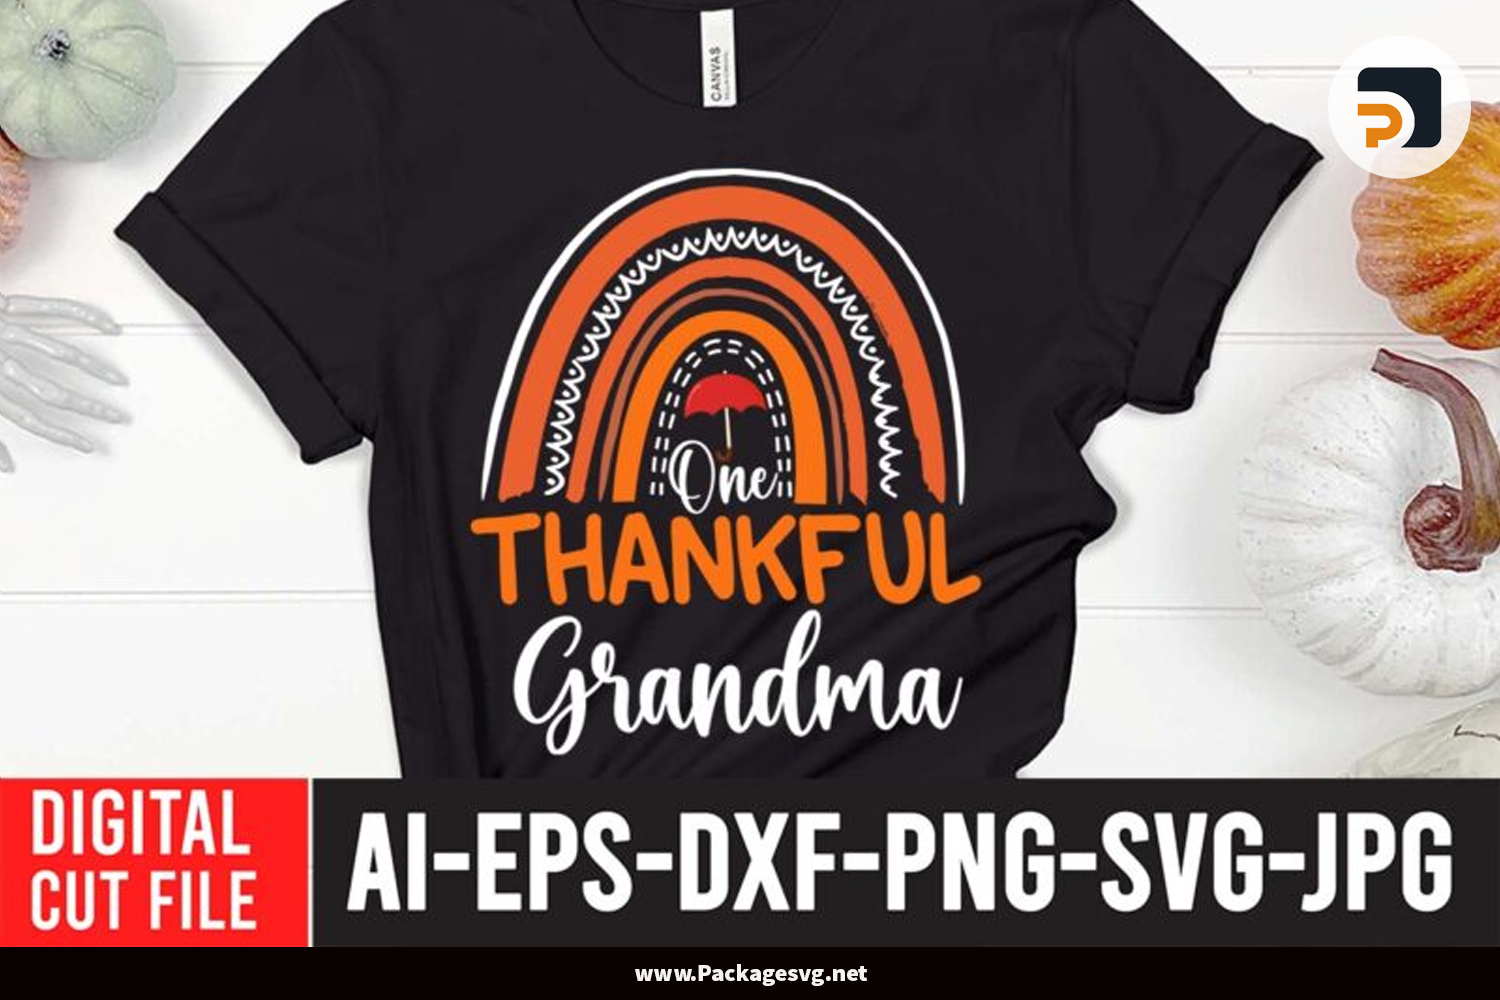 One thankful grandma SVG PNG JPG DXF EPS AI